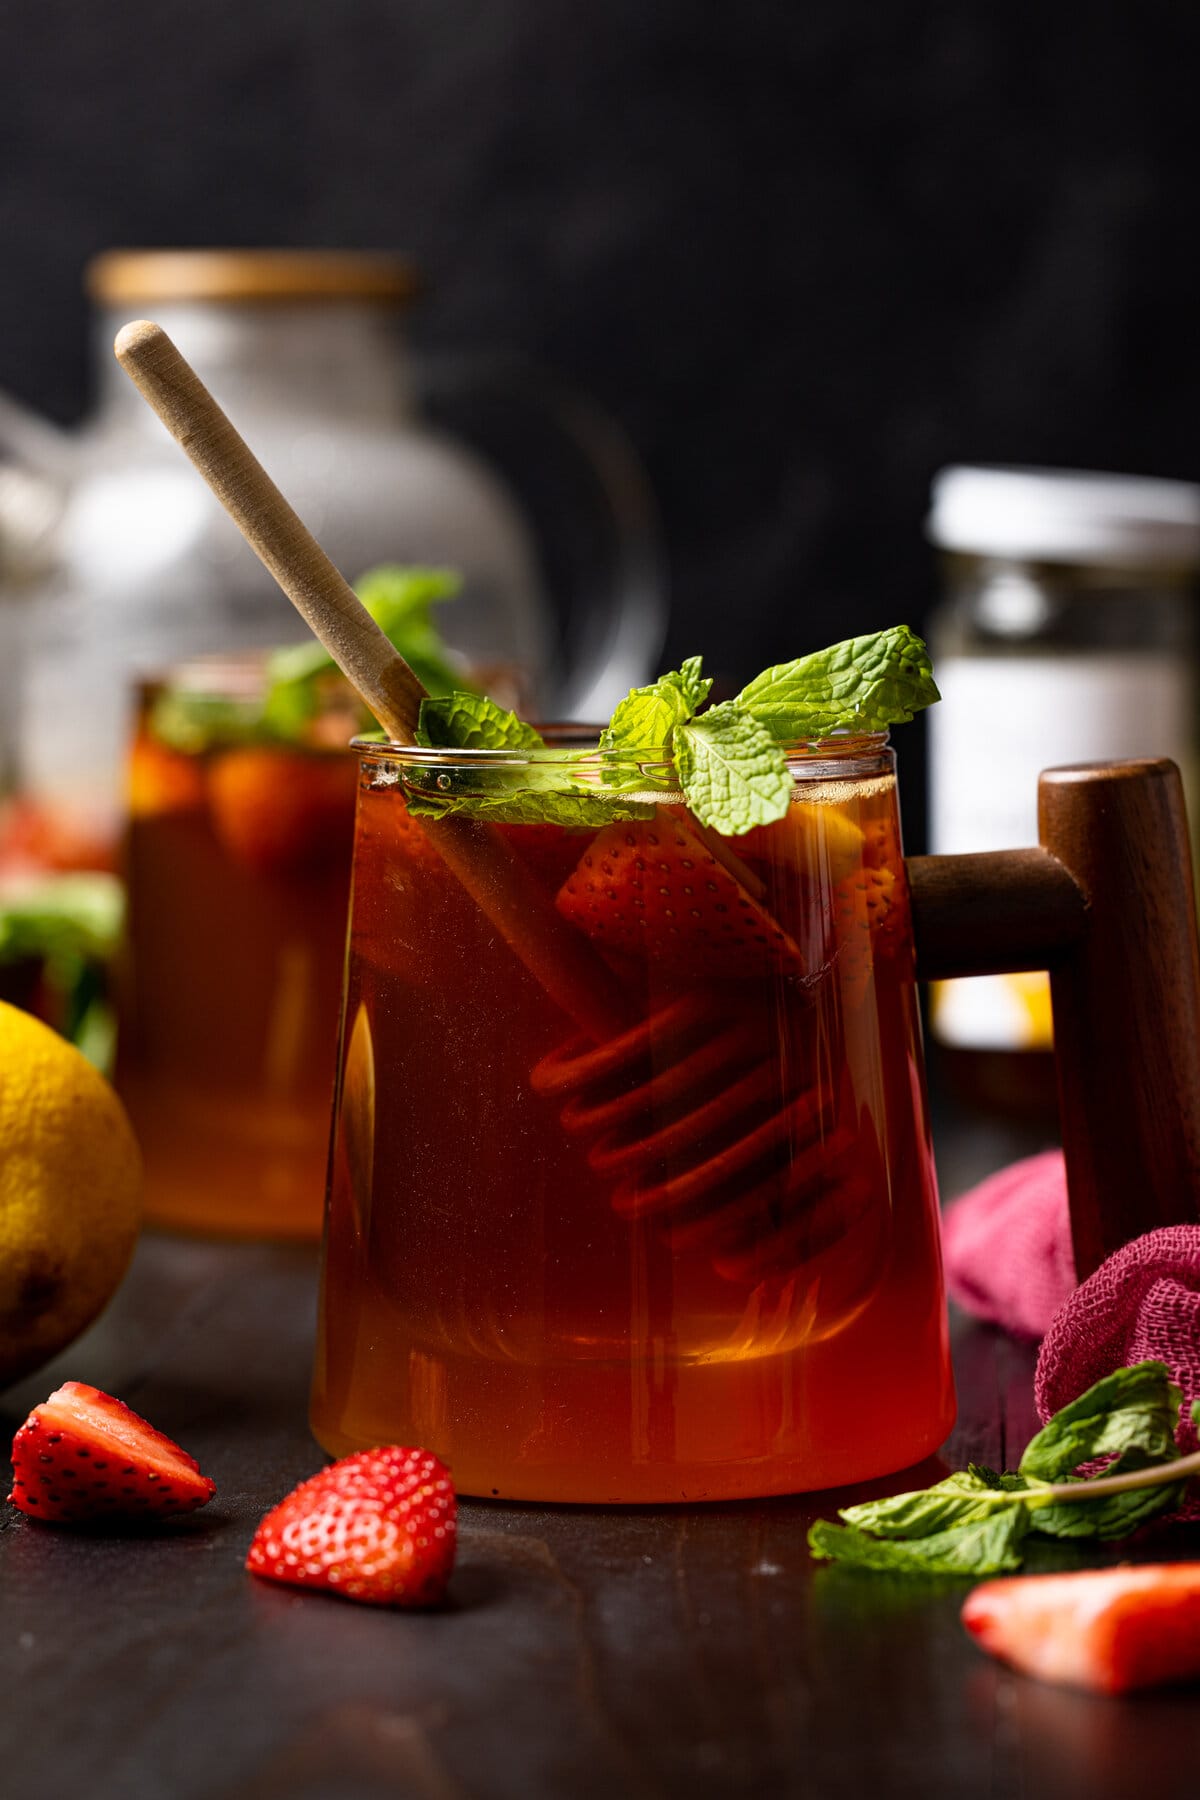 Closeup of a glass of Roasted Dandelion Strawberry Tea